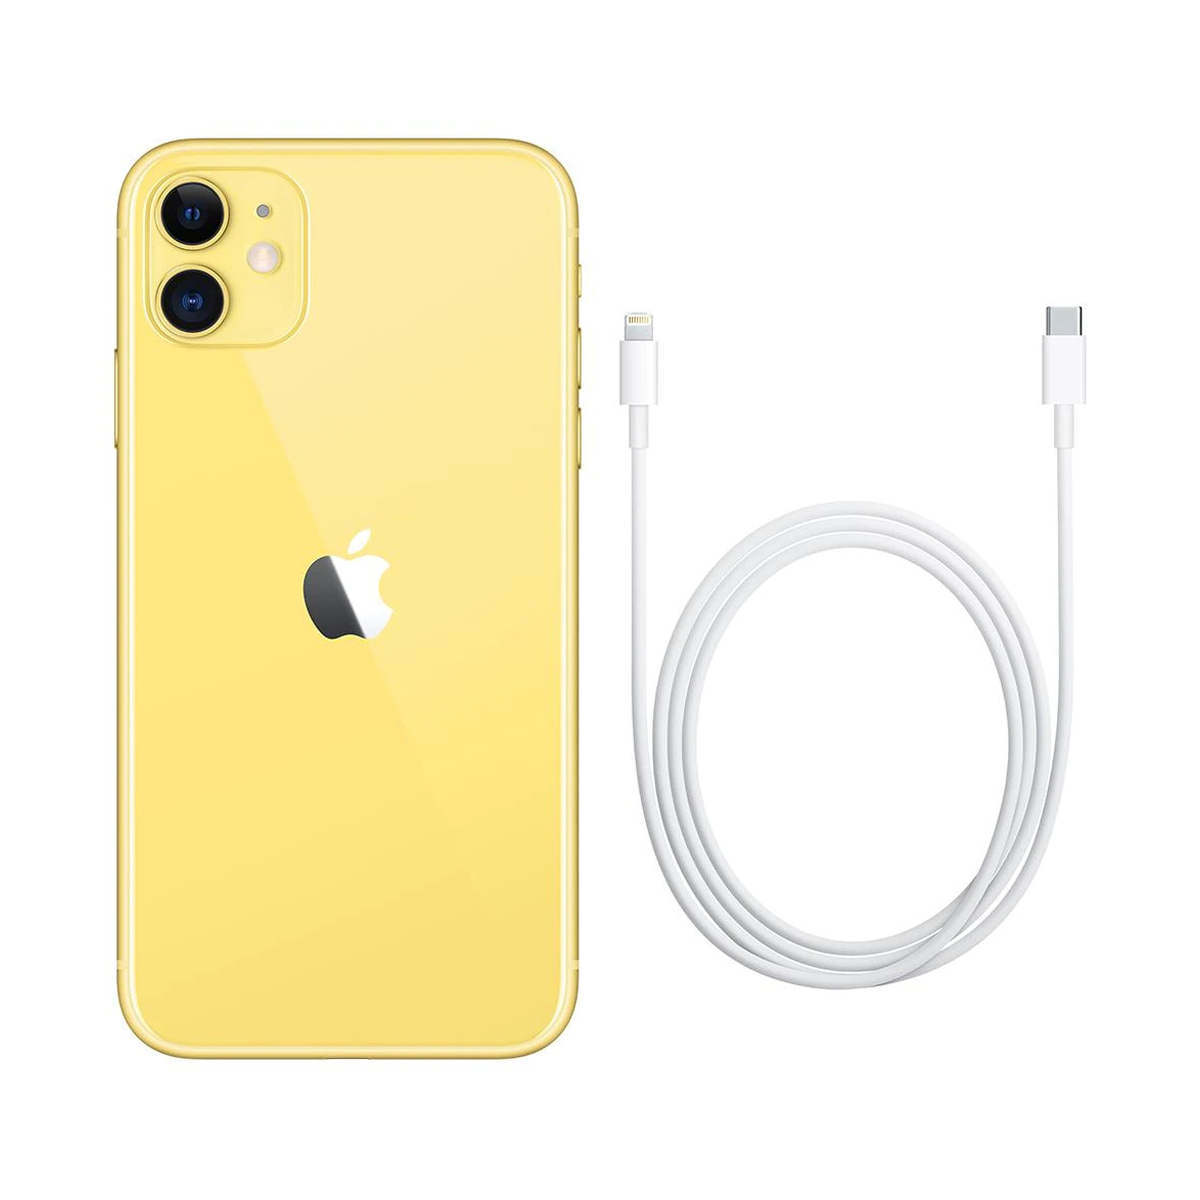 Apple iPhone 11 256gb Tela 6.1' Cam 12mp Mostruário